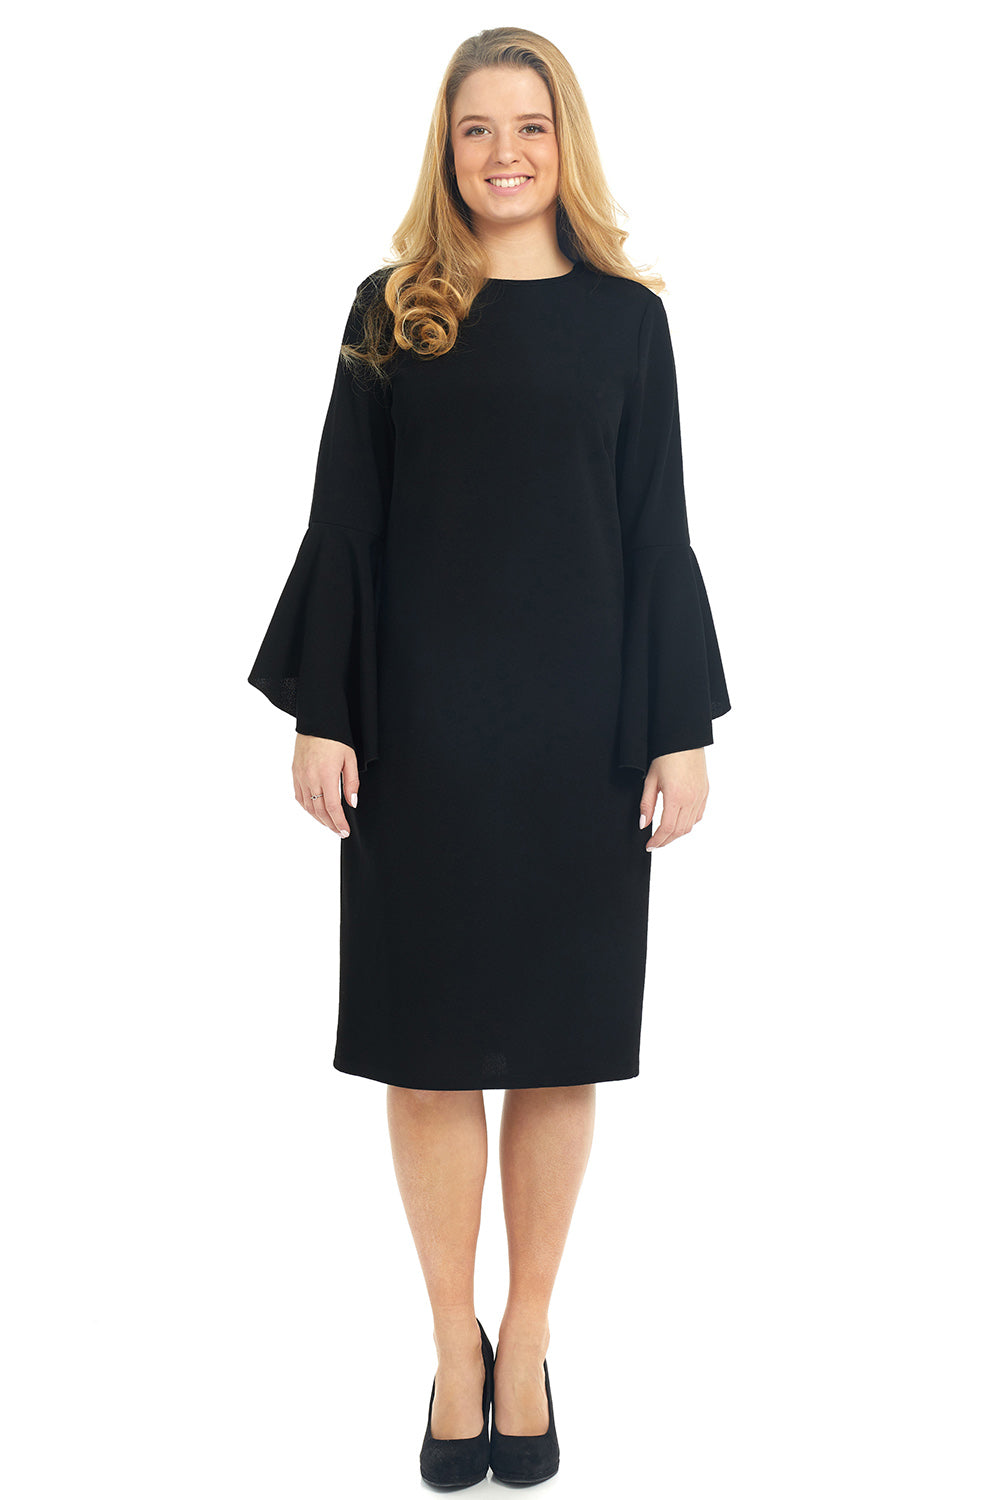 Esteez KATEE Dress for women - Waterfall Bell Sleeves - BLACK